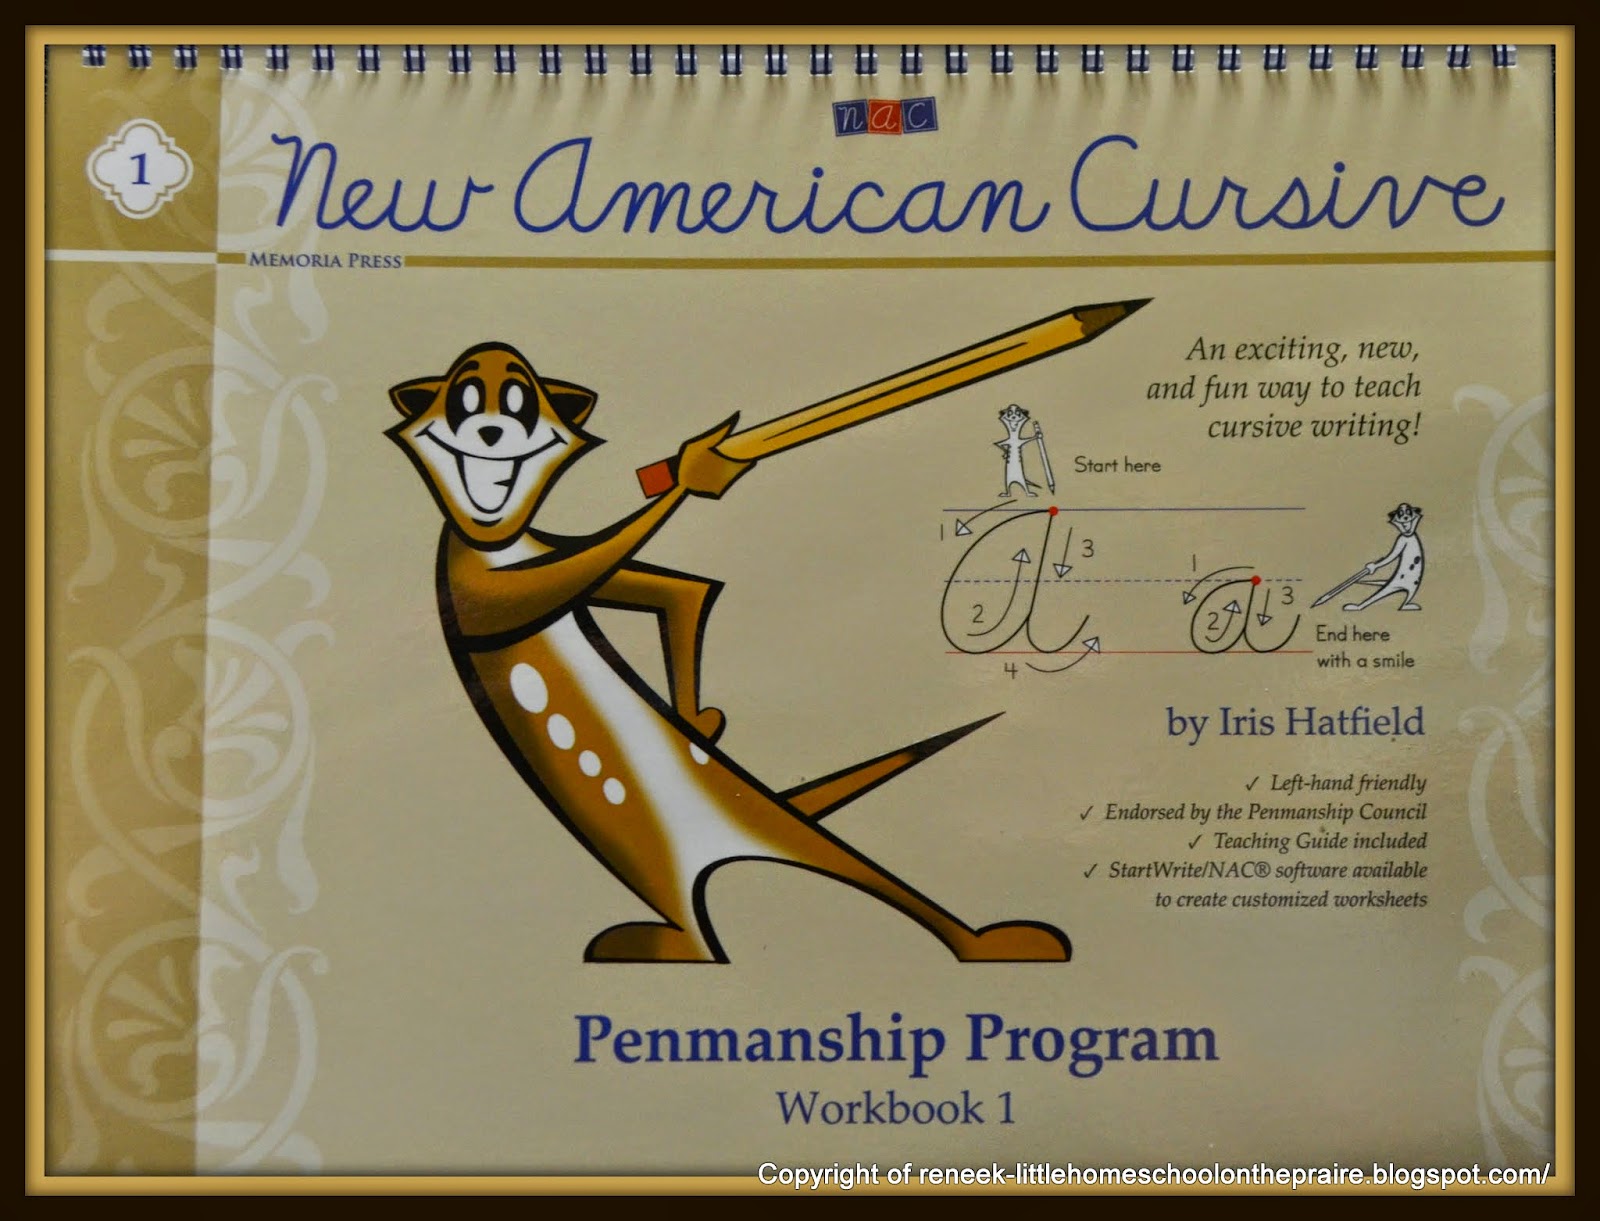 http://www.memoriapress.com/curriculum/penmanship/new-american-cursive